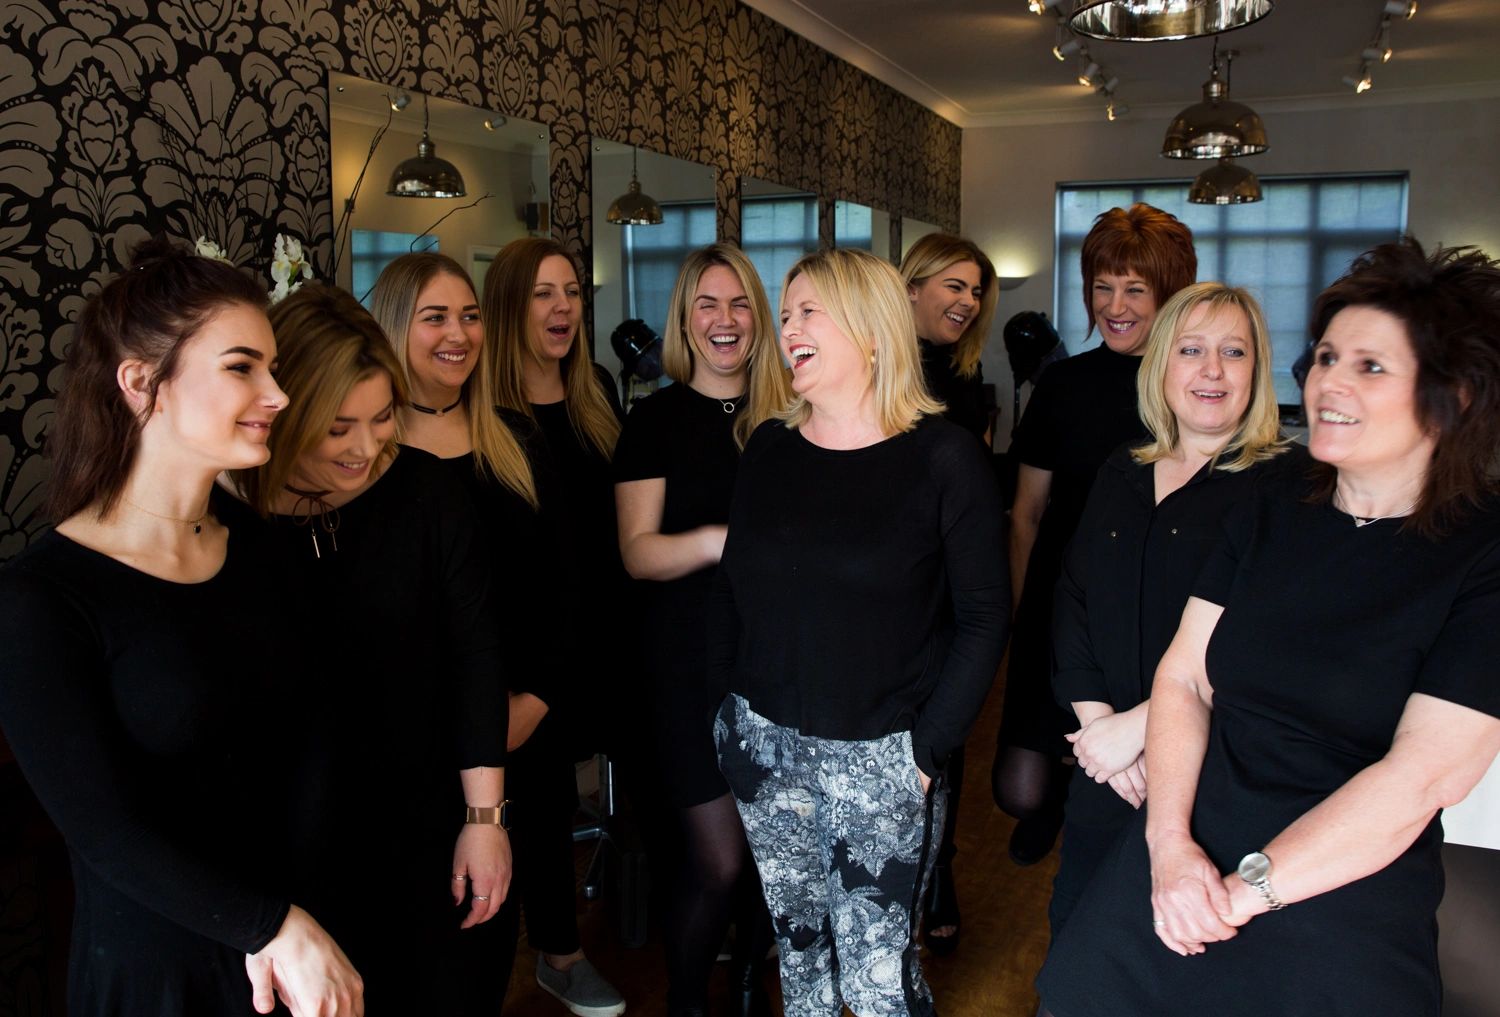 Lucie Harrington Hair & Beauty - Hair Salon based in Farnham, Surrey